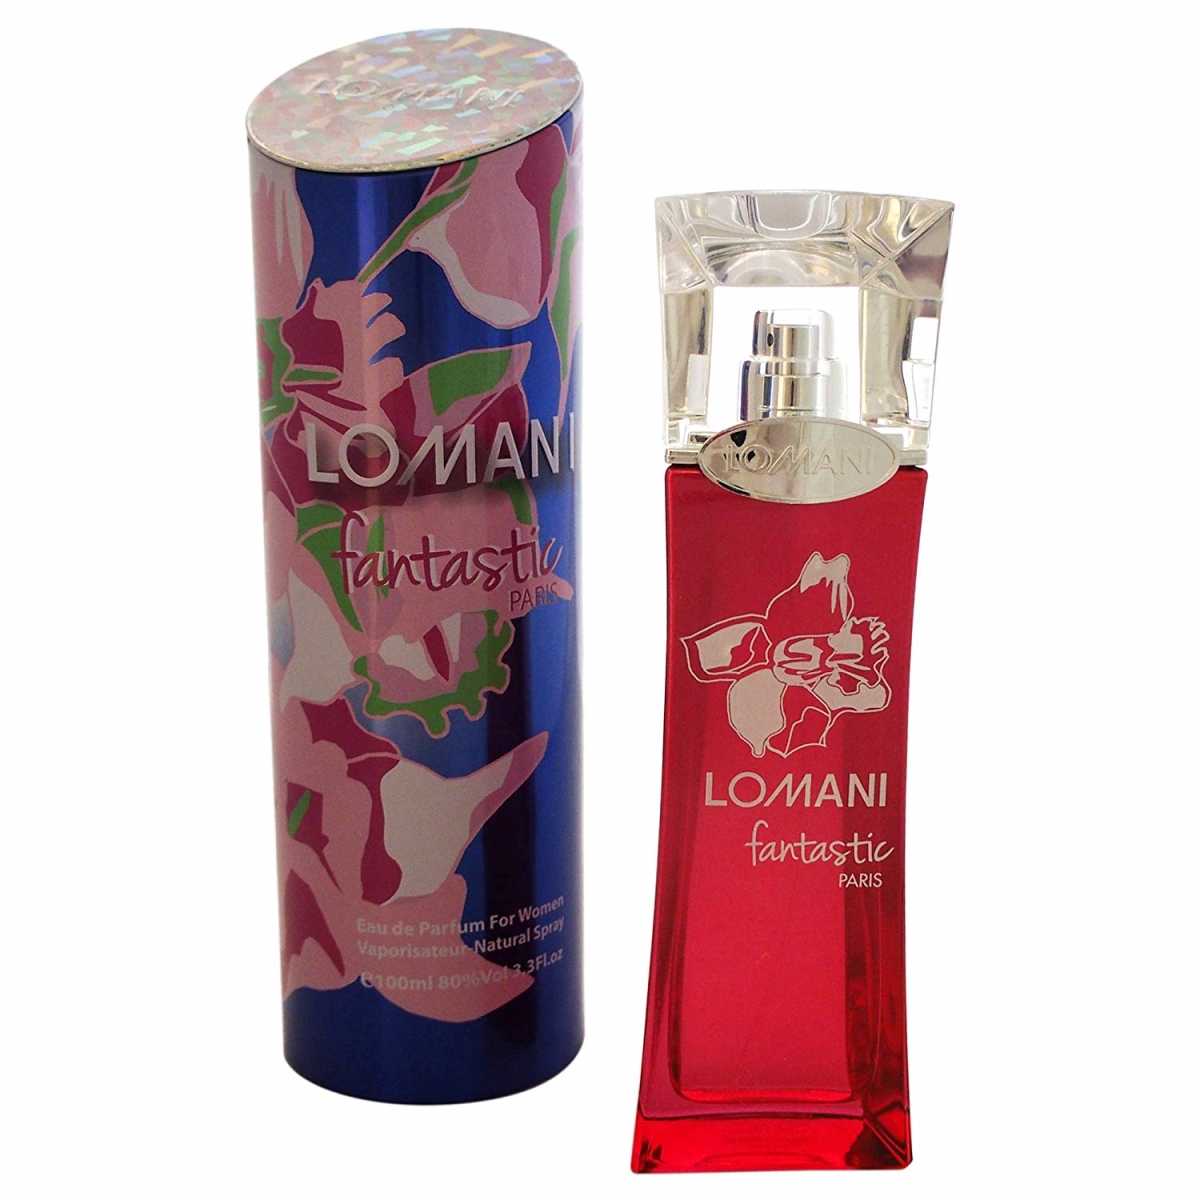 547848 3.3 Oz Women Fantastic Perfume